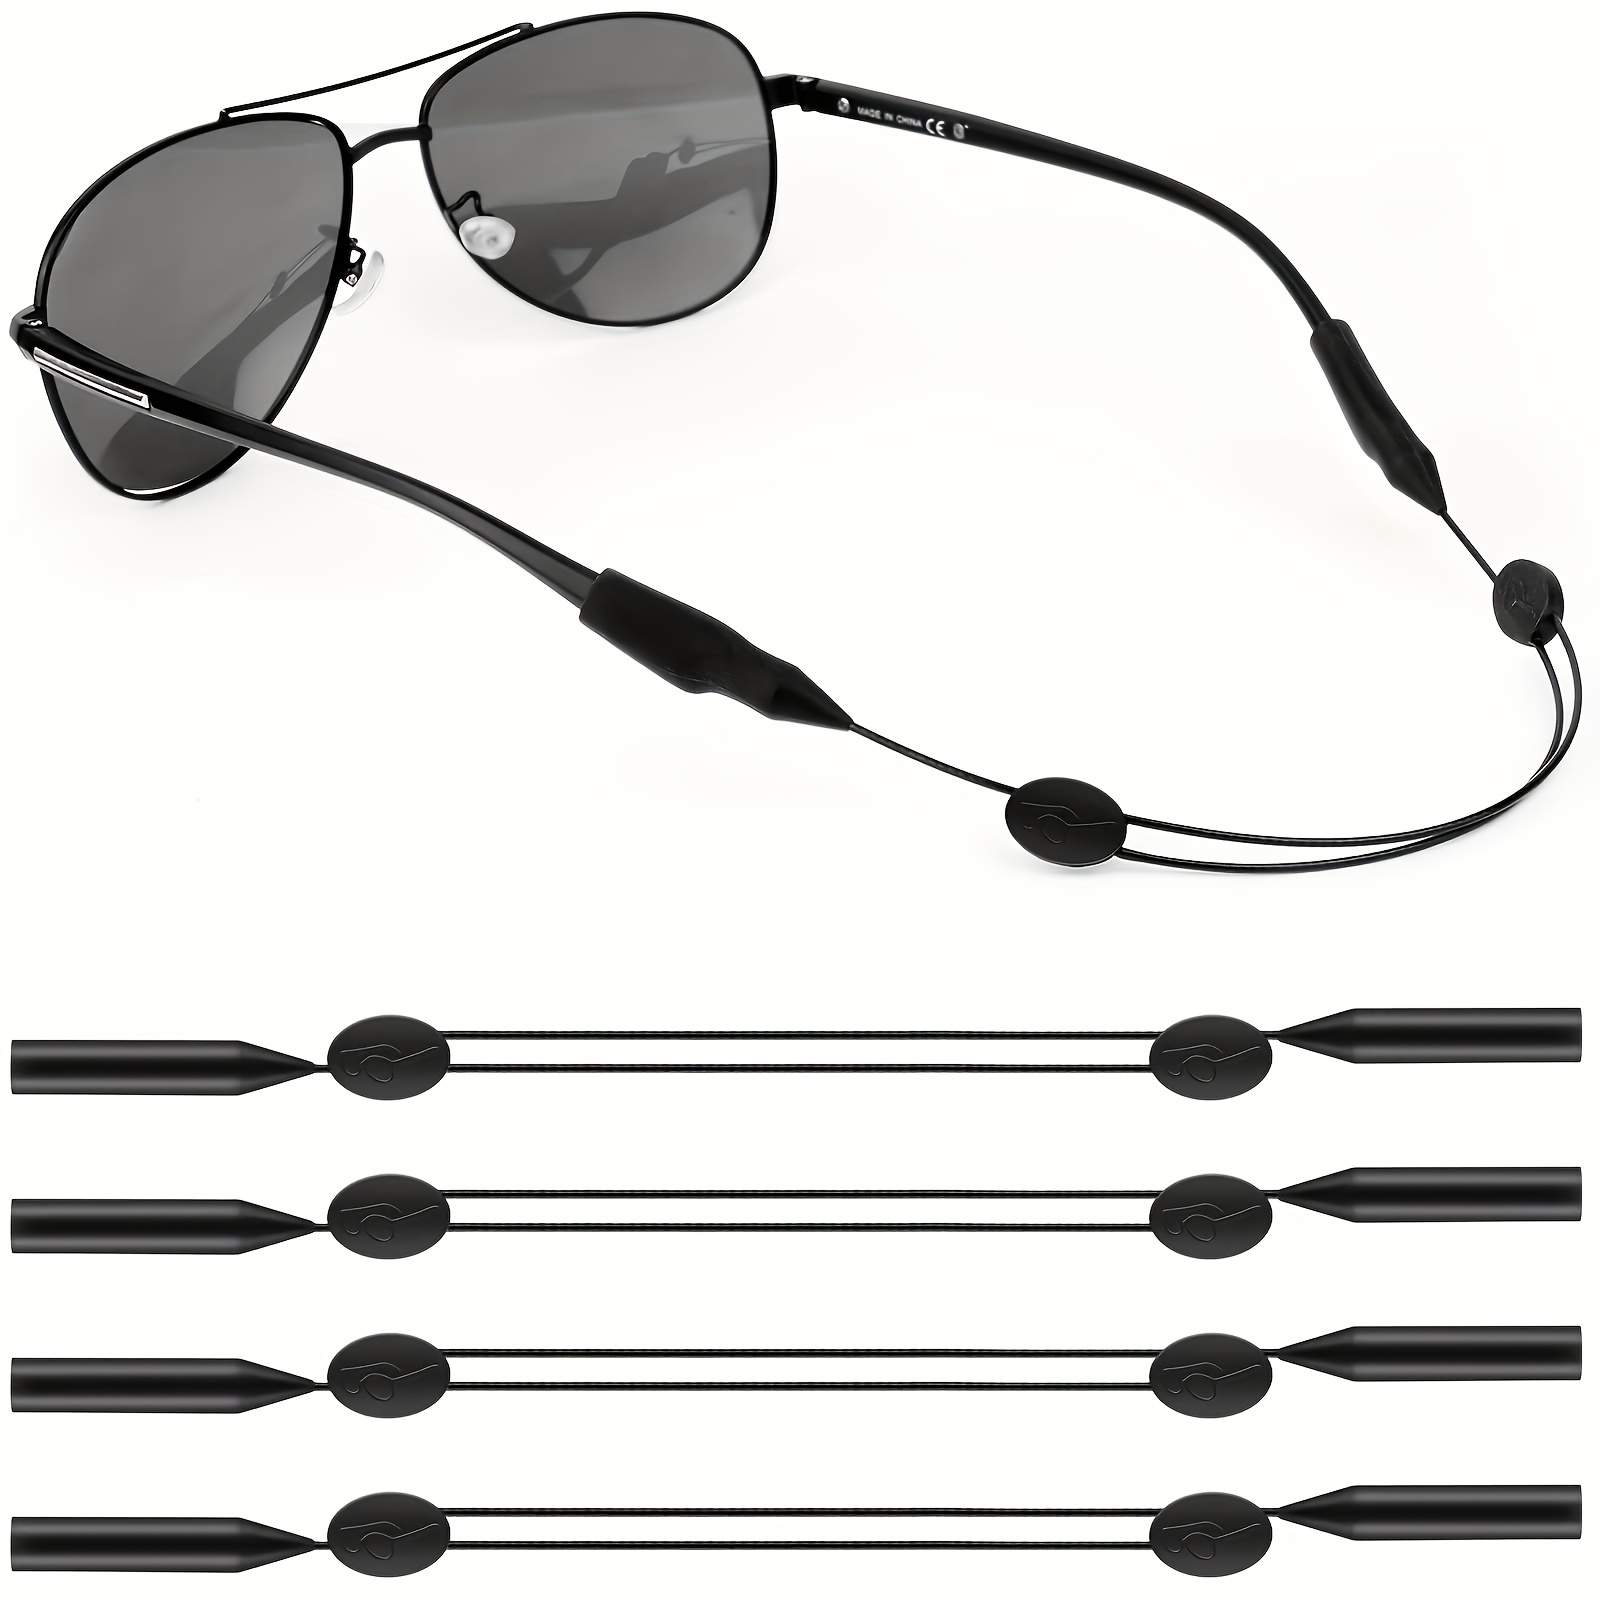 1pc Men's Adjustable Anti-Slip Glasses Strap, Telescopic Glasses Rope - No  Tail Cable Strap For Eyeglasses & Sunglasses Perfect For Men & Women & Adul